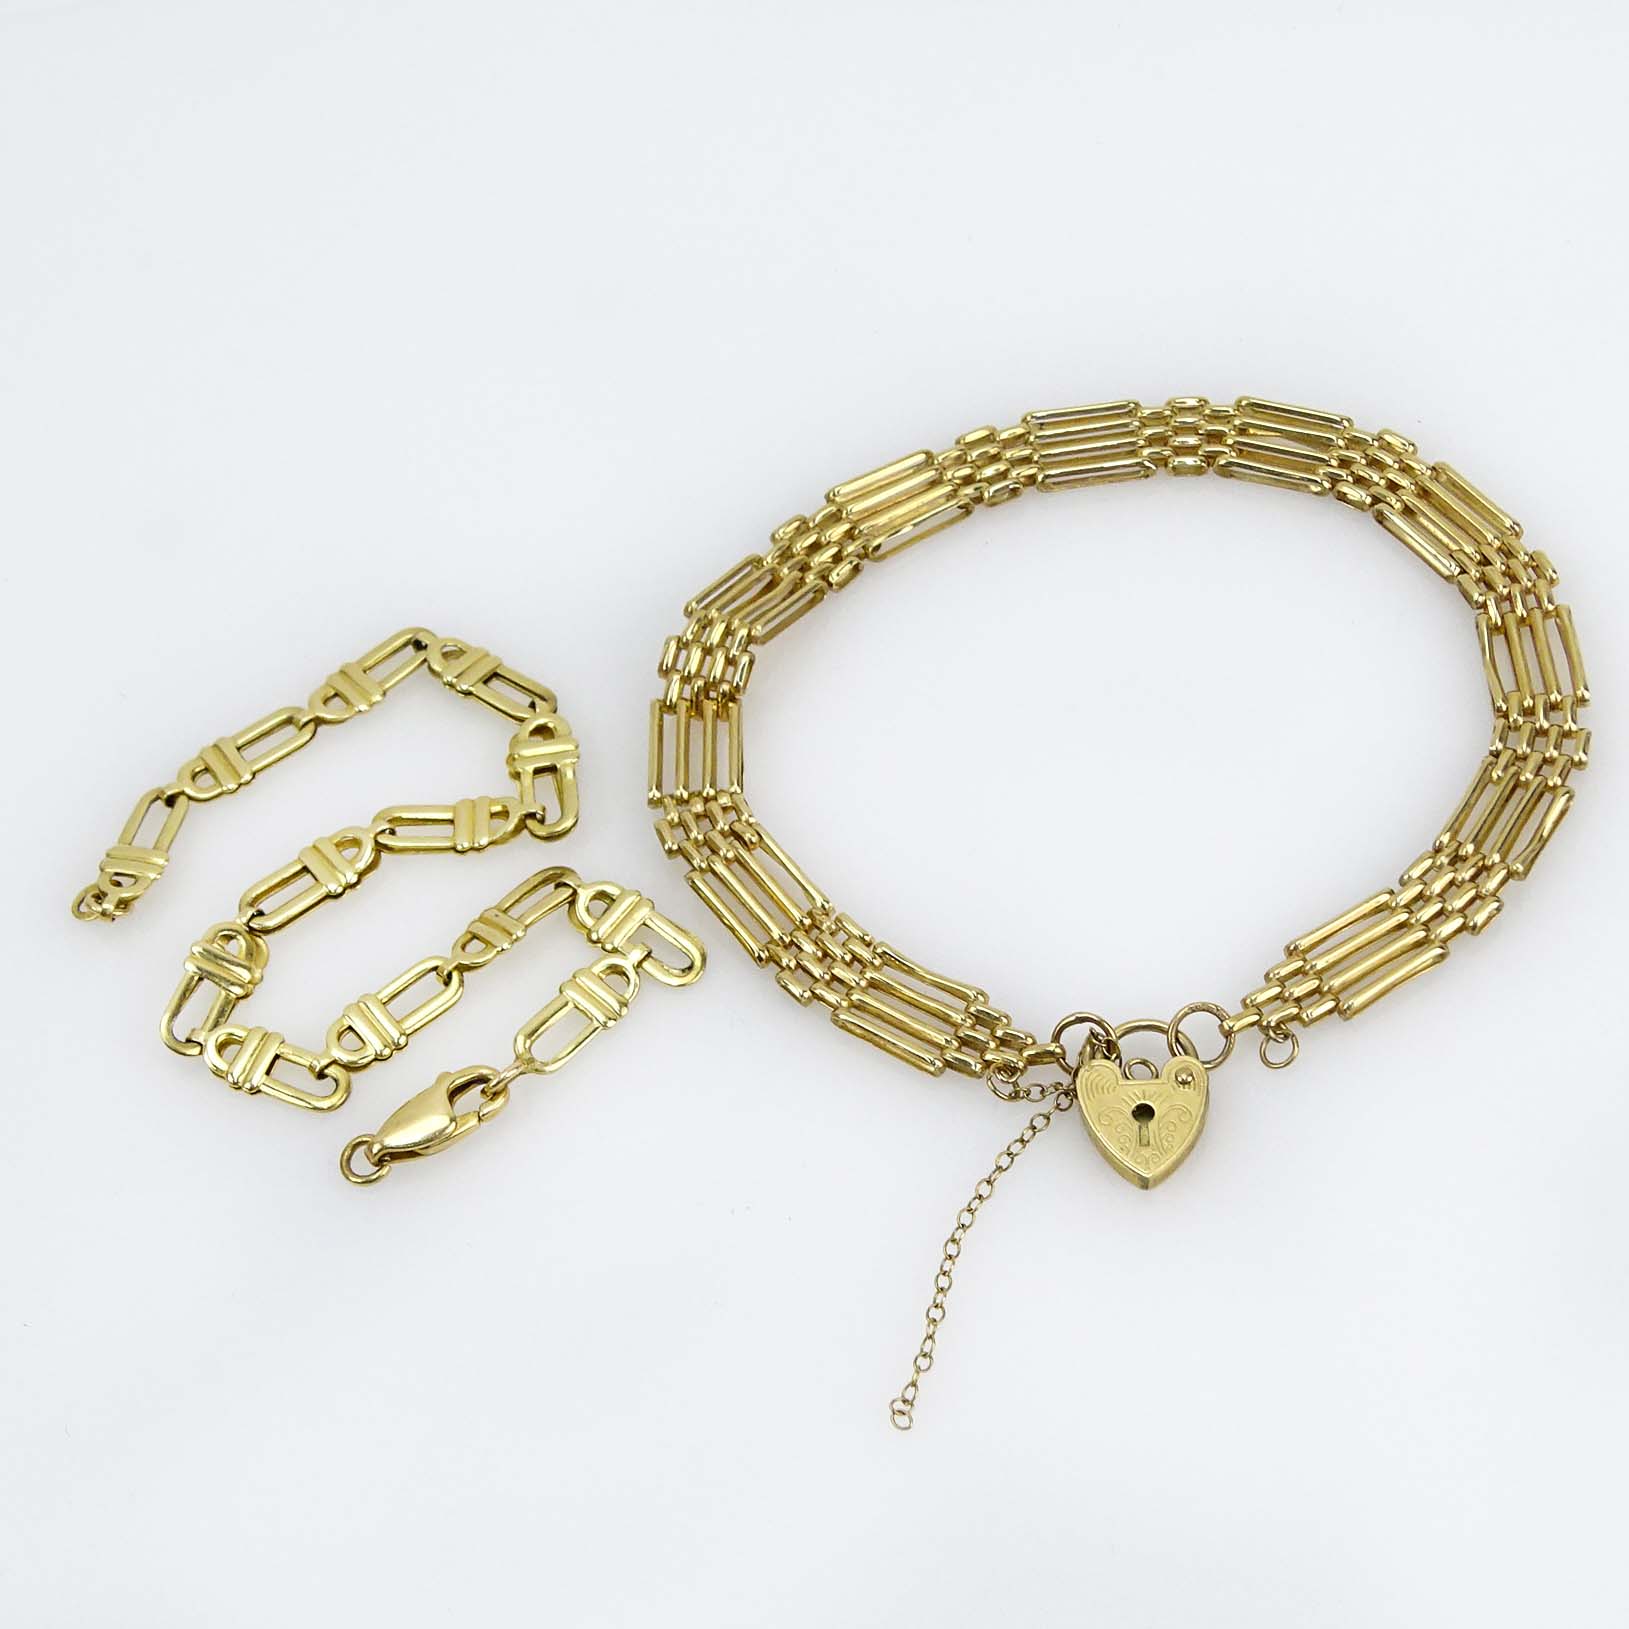 Vintage 14 Karat Yellow Gold Link Bracelet and Vintage 10 Karat Yellow Gold Link Bracelet with Heart Locket Clasp.